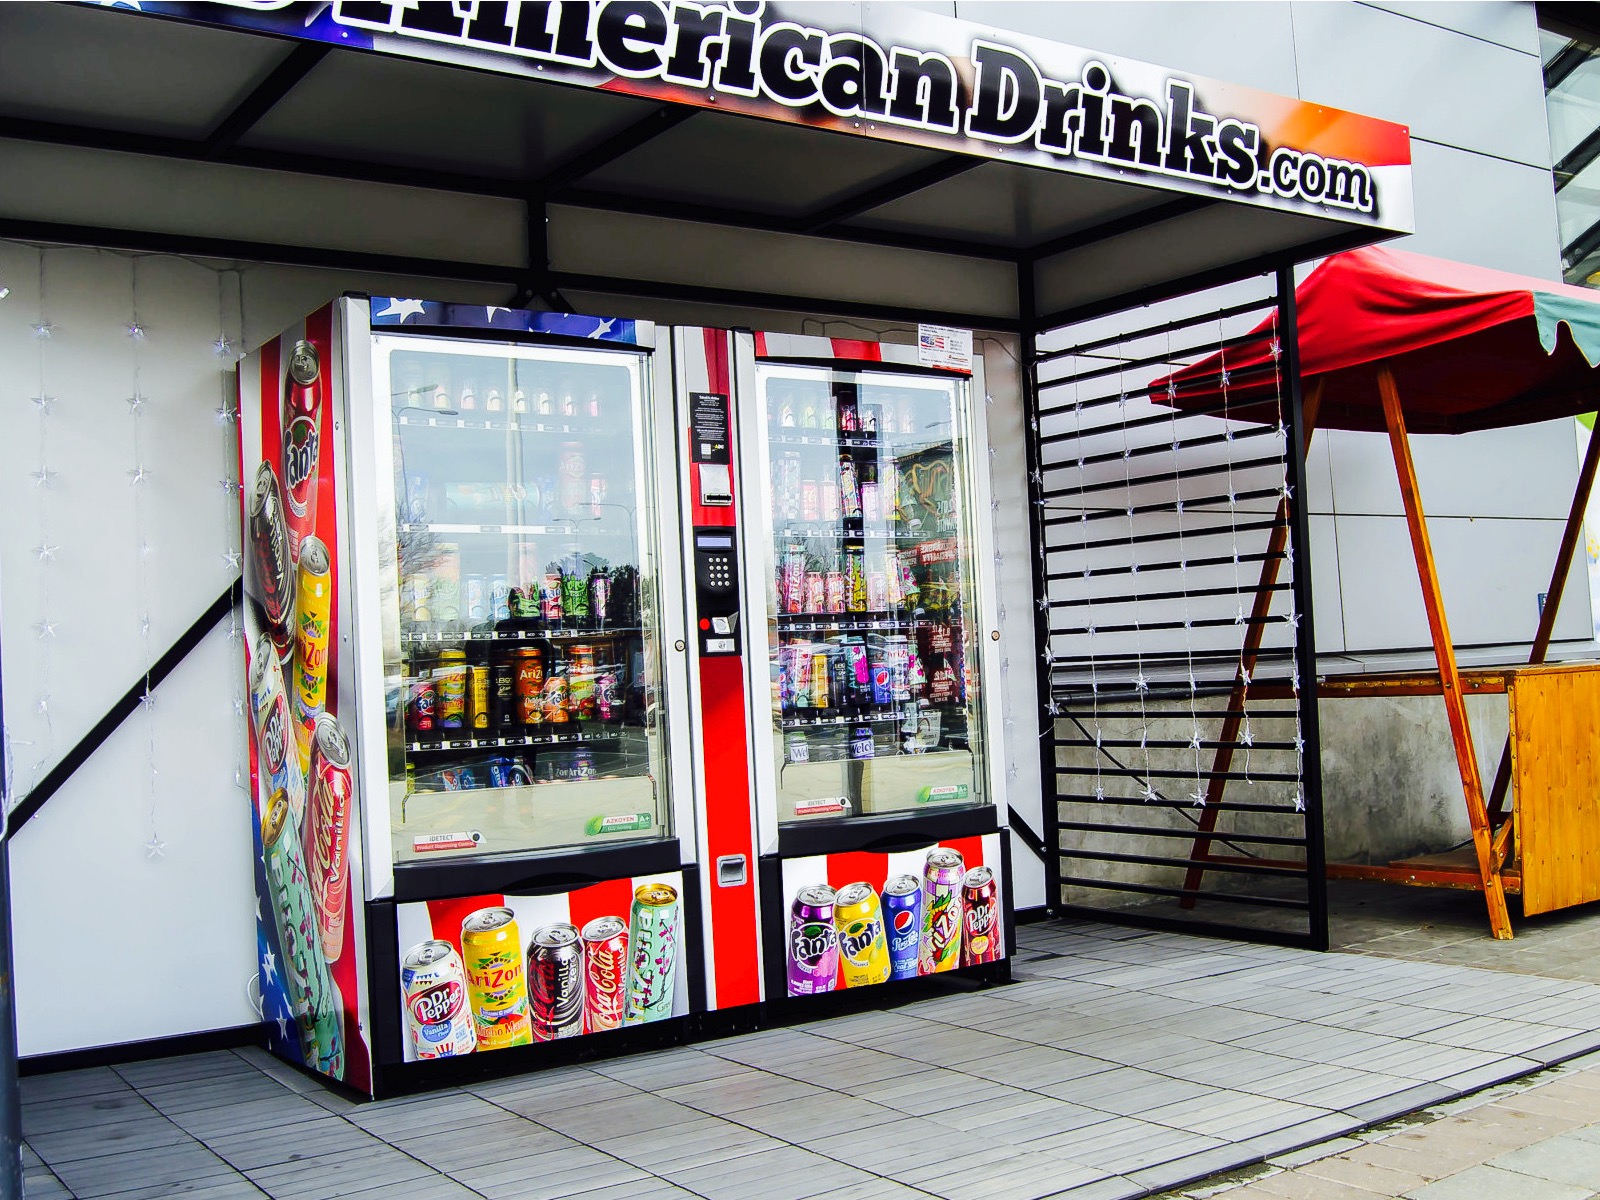 Vending machines AmericanDrinks